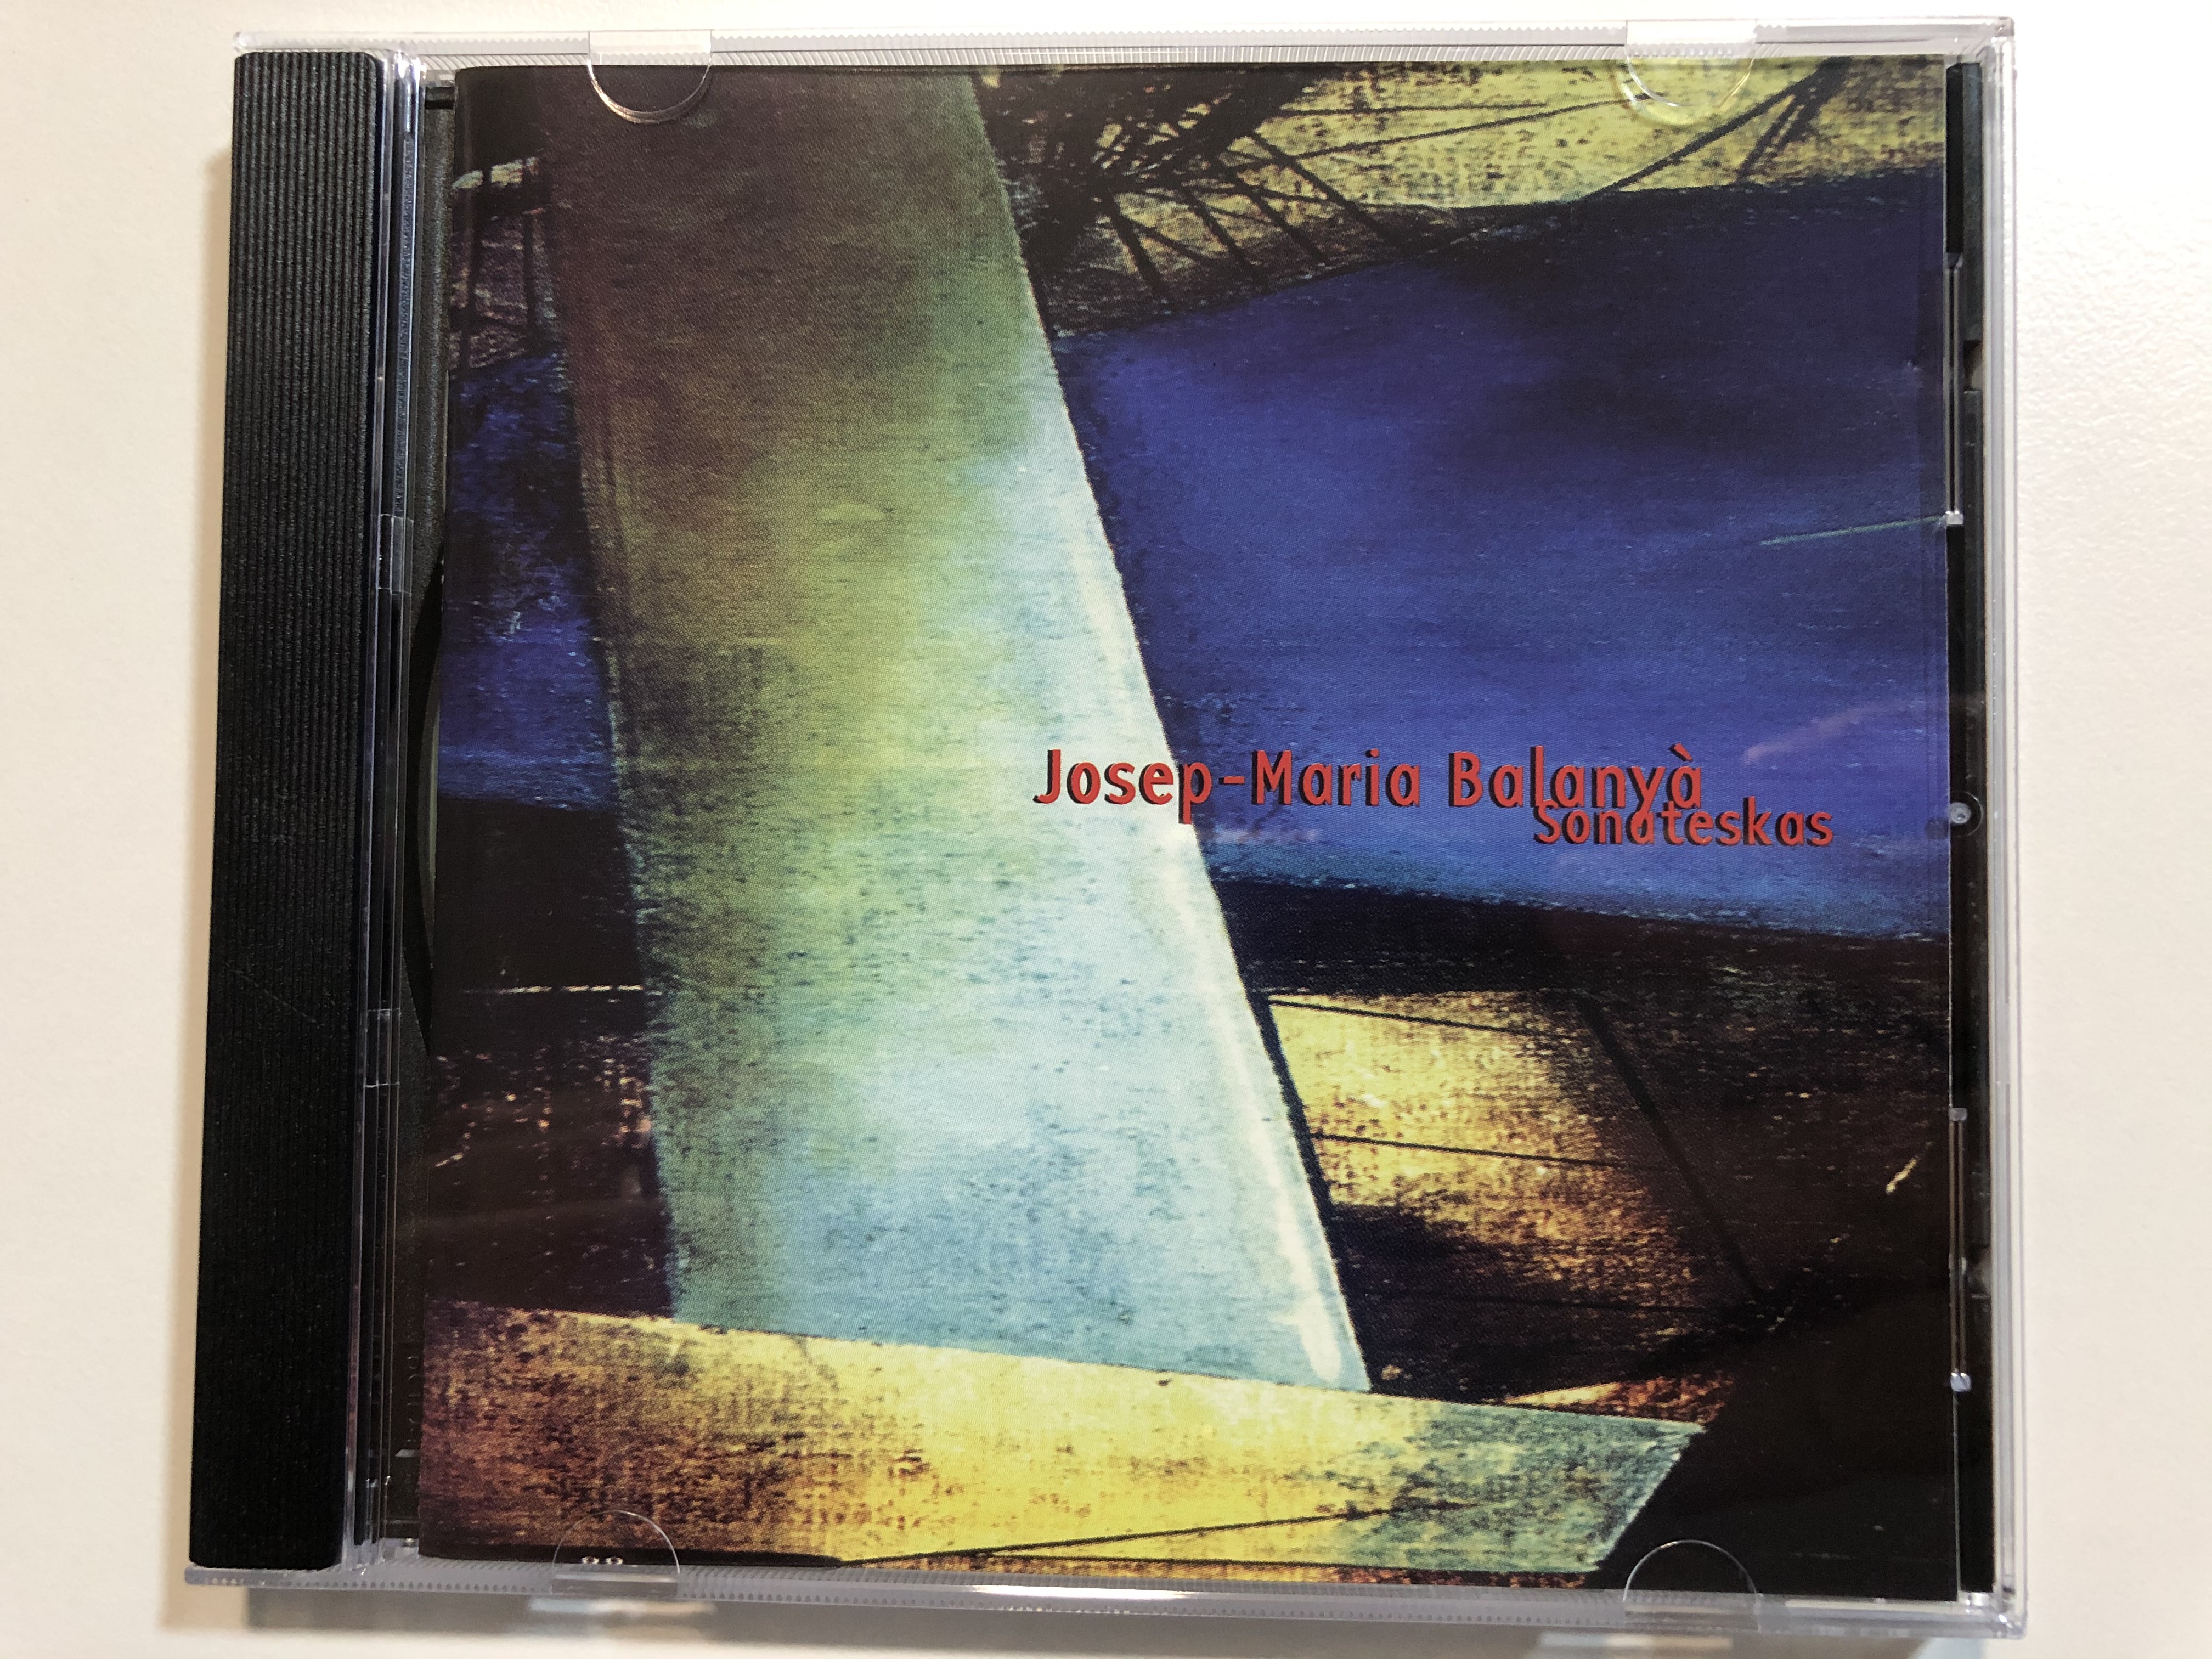 josep-maria-balany-sonateskas-laika-records-audio-cd-1999-35101102-1-.jpg